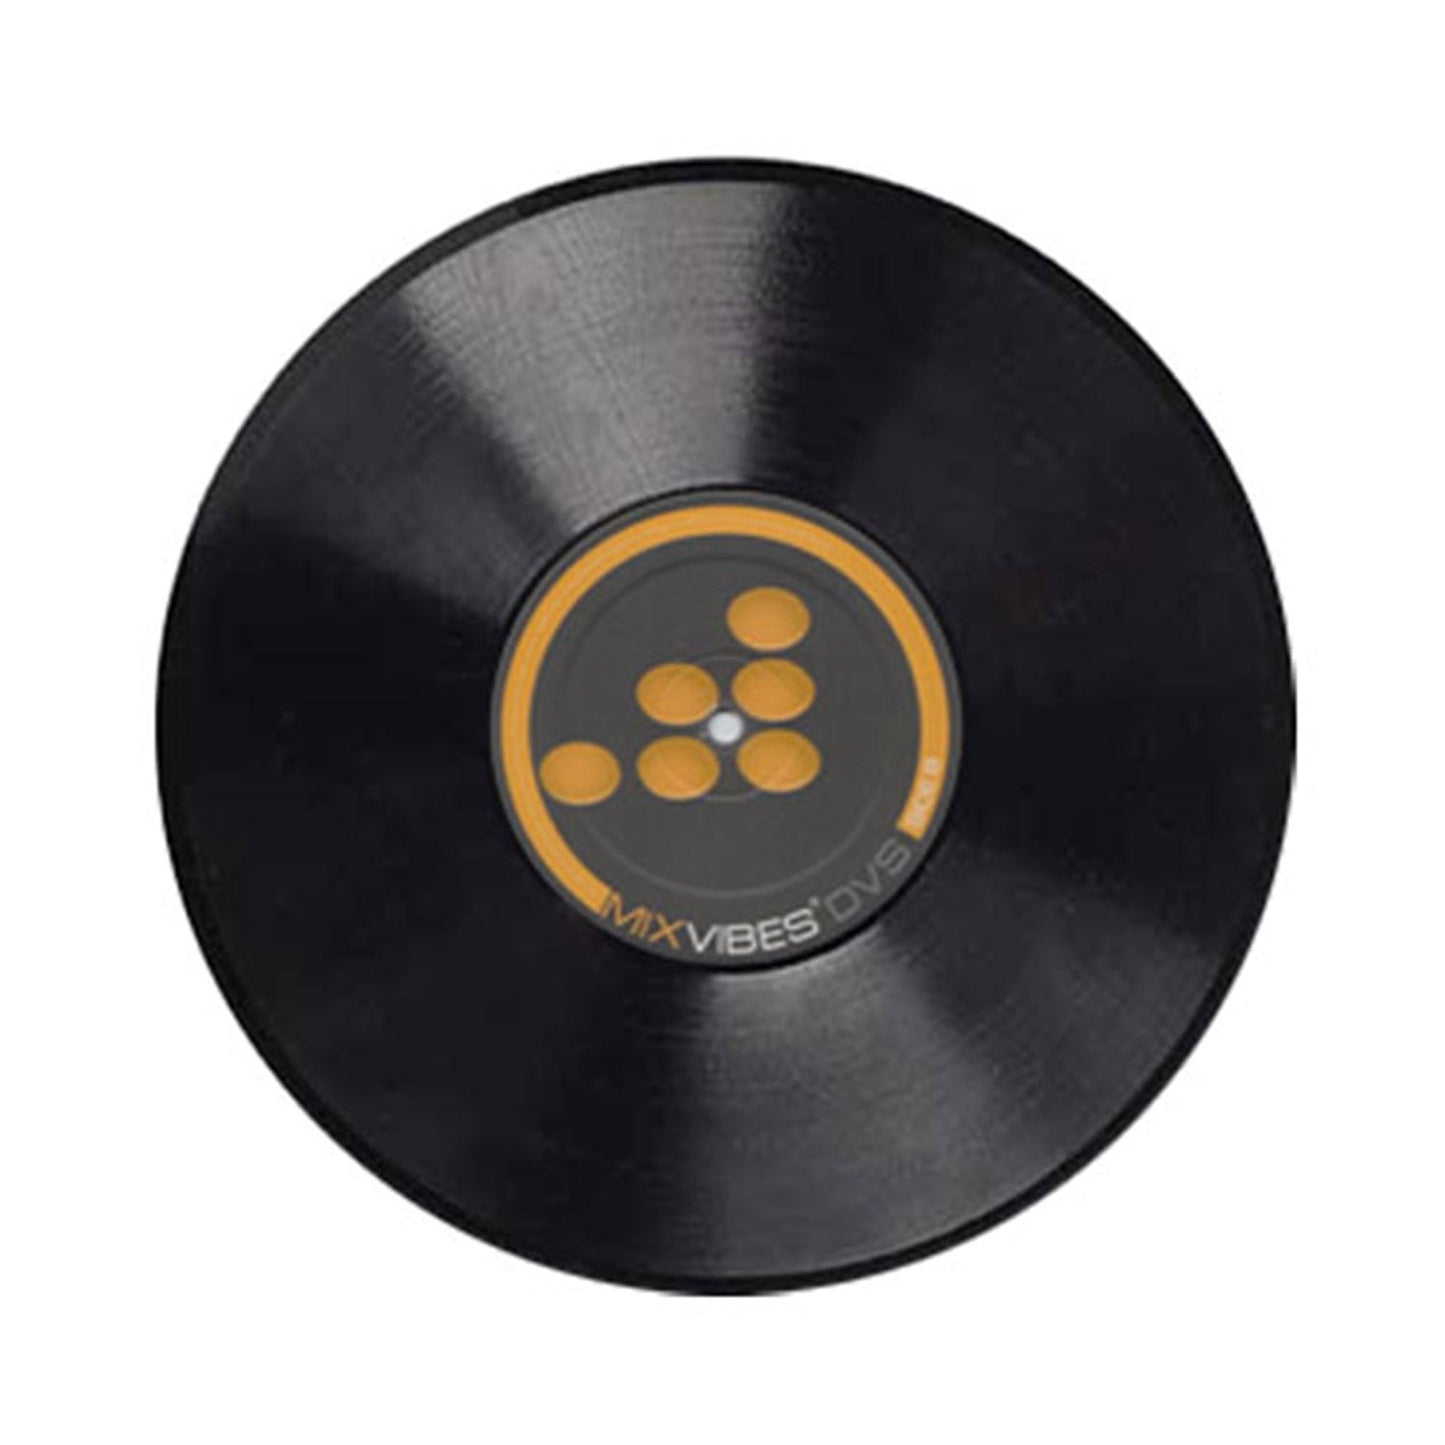 Mixvibes MV-V2 Spare Time-Coded Vinyl Single - PSSL ProSound and Stage Lighting